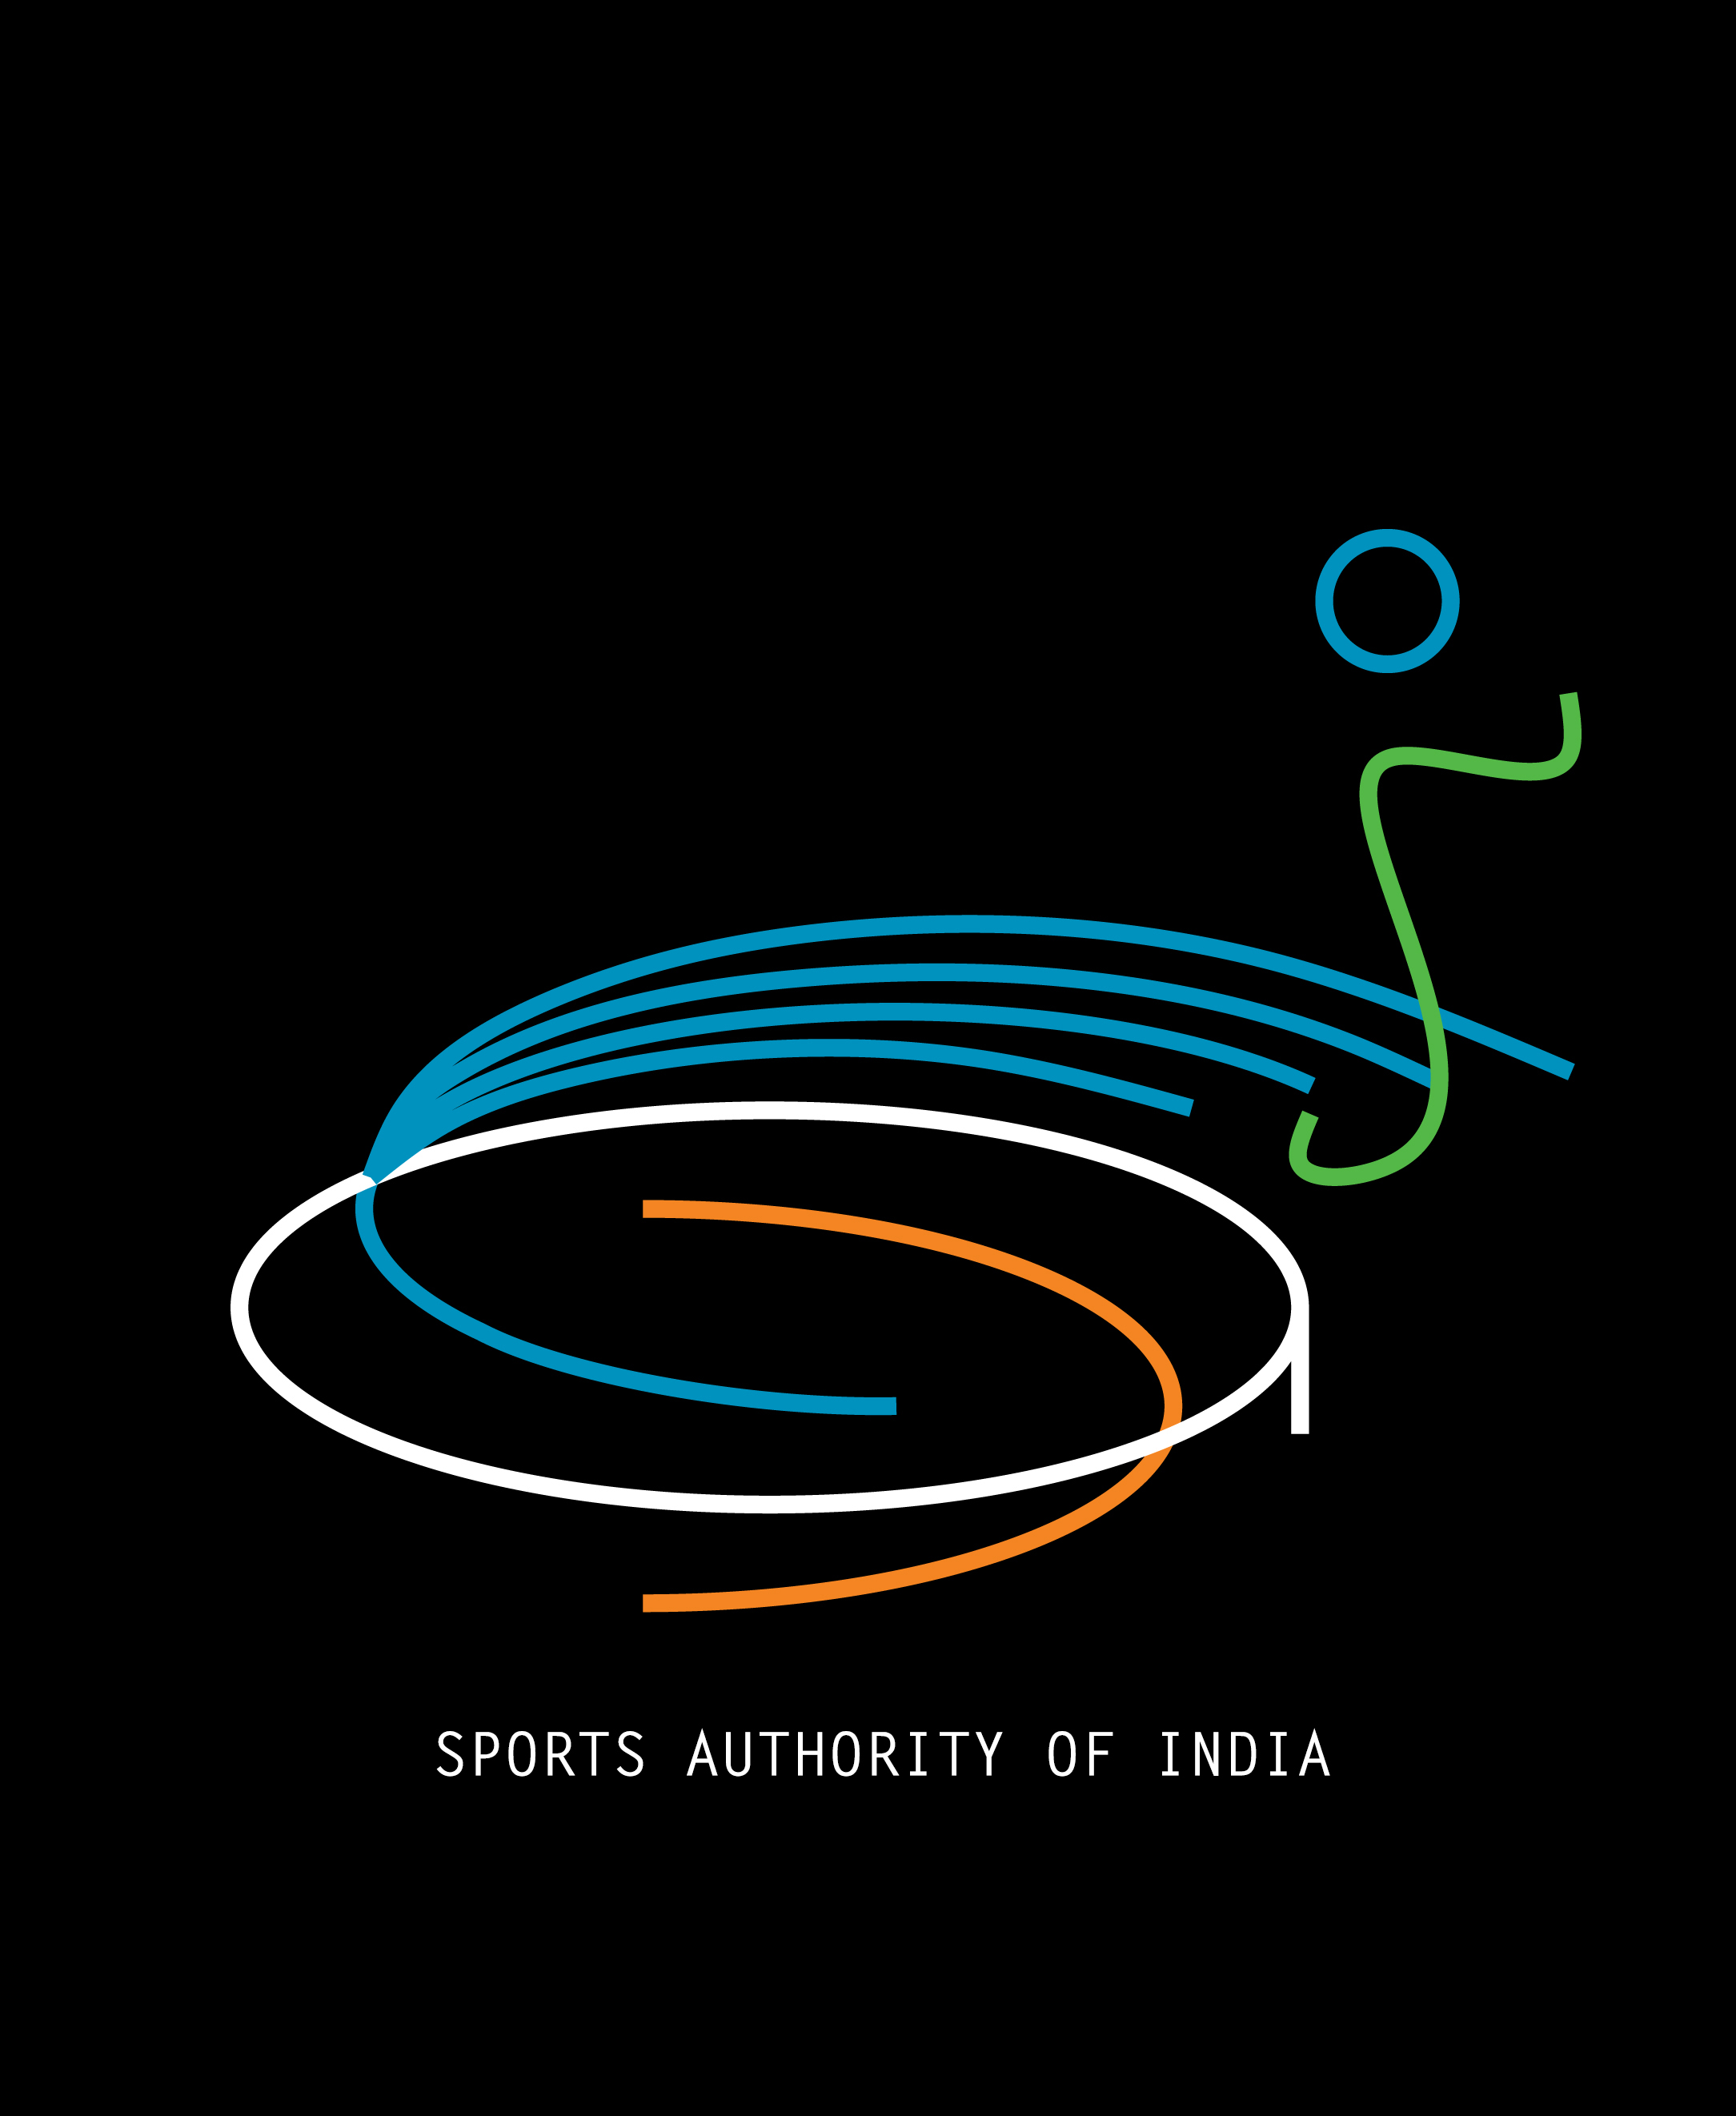 New India Logo by Akhtar Khan on Dribbble